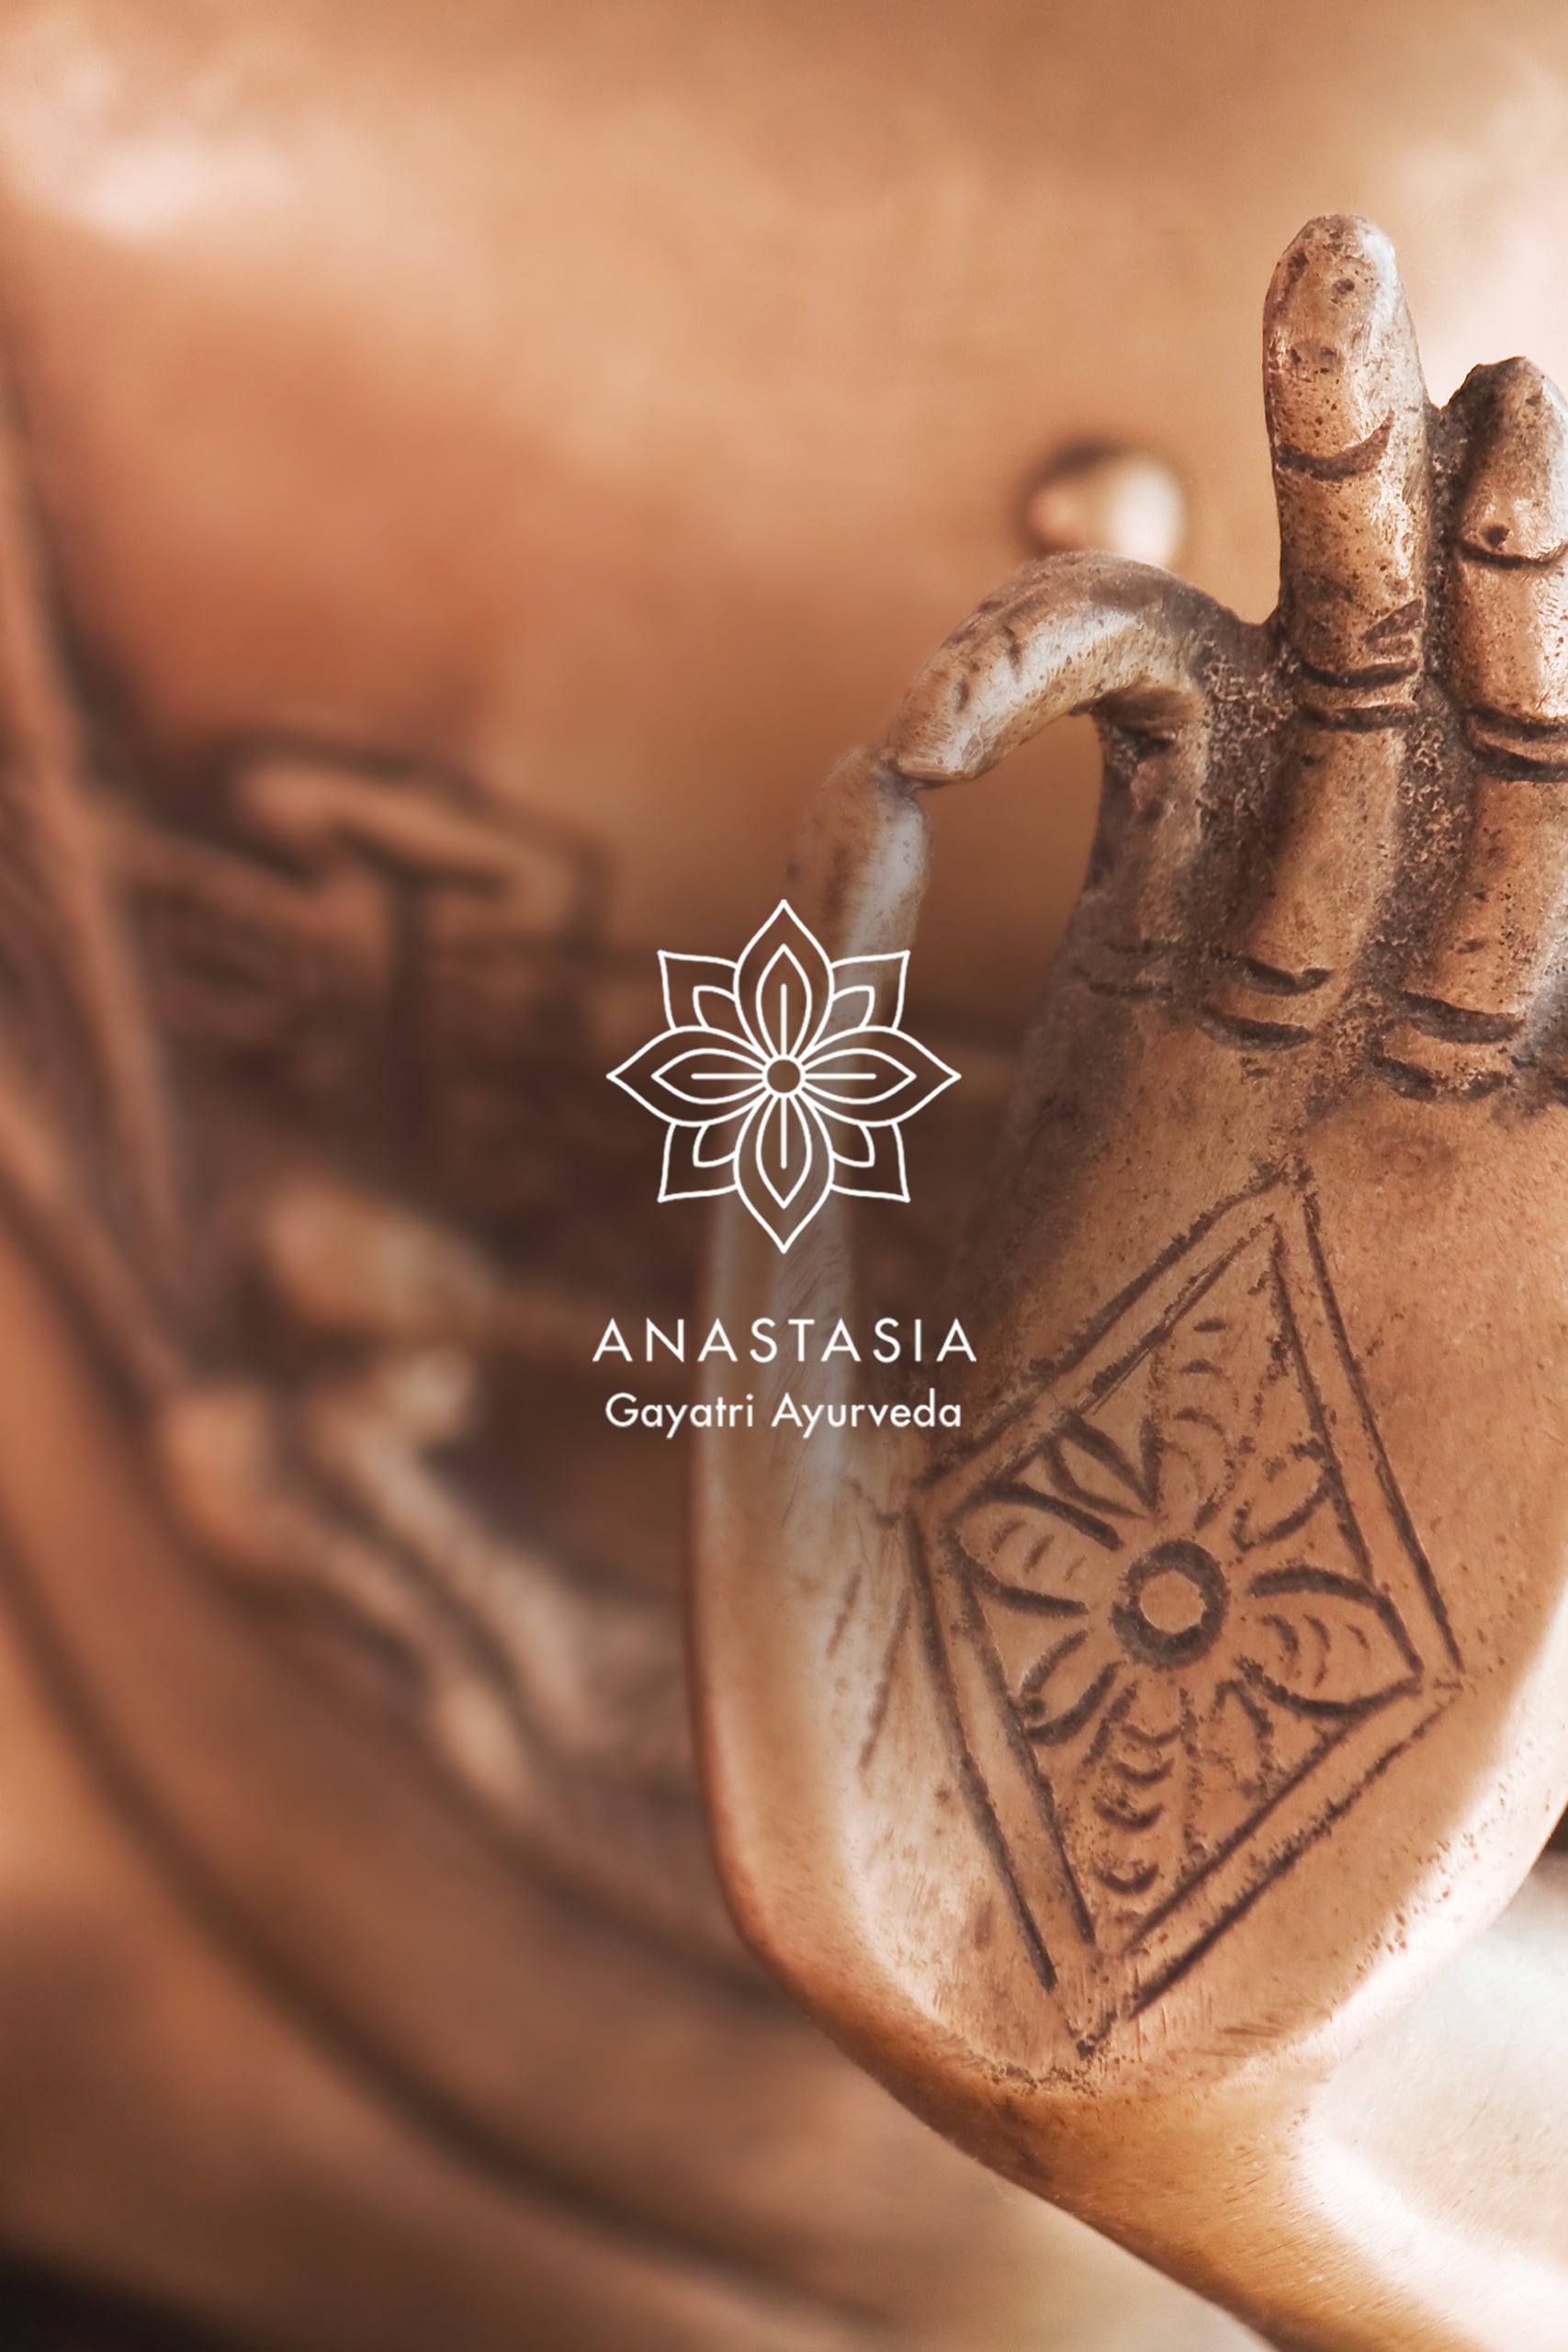 Logo blanc Anastasia Gayatri Ayurveda en arrrière plan on retrouve une photo de bouddha